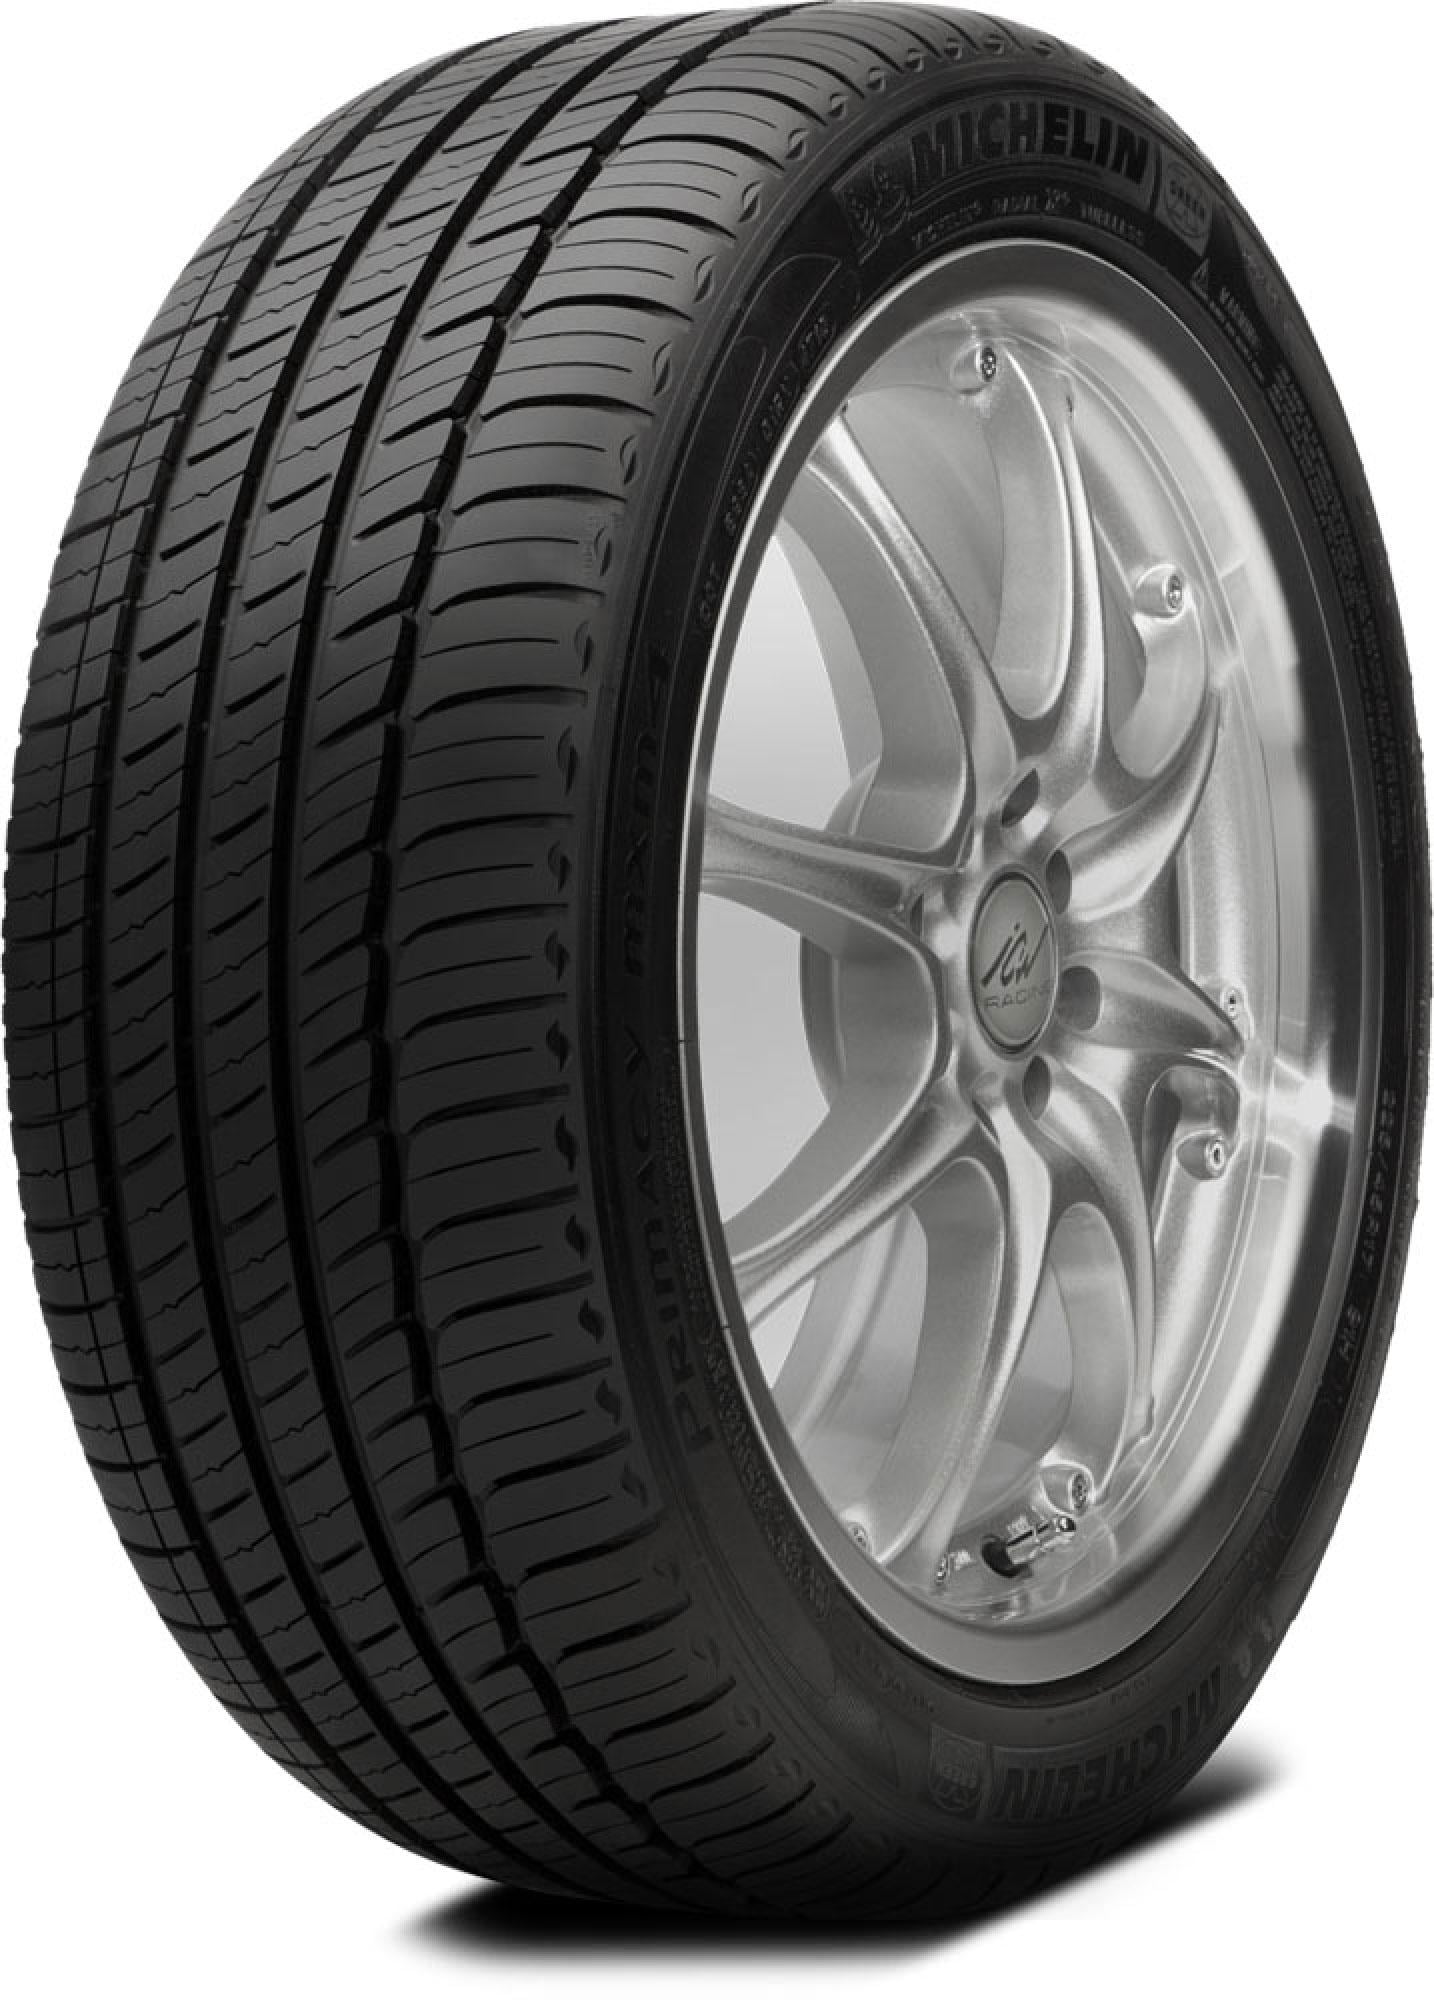 Michelin Primacy MXM4 All-Season 255/45R19 100V Tire - Walmart.com